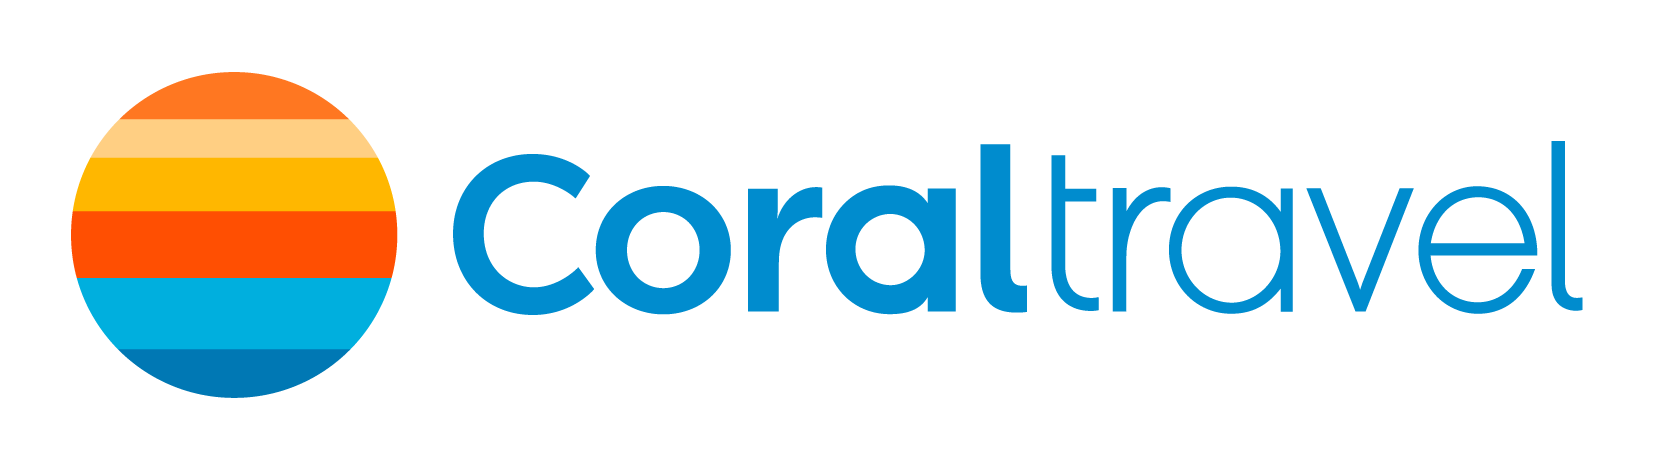 Coral личный кабинет. Корал Тревел. Coral логотип. Coral Travel лого. Coral Travel турагентство.